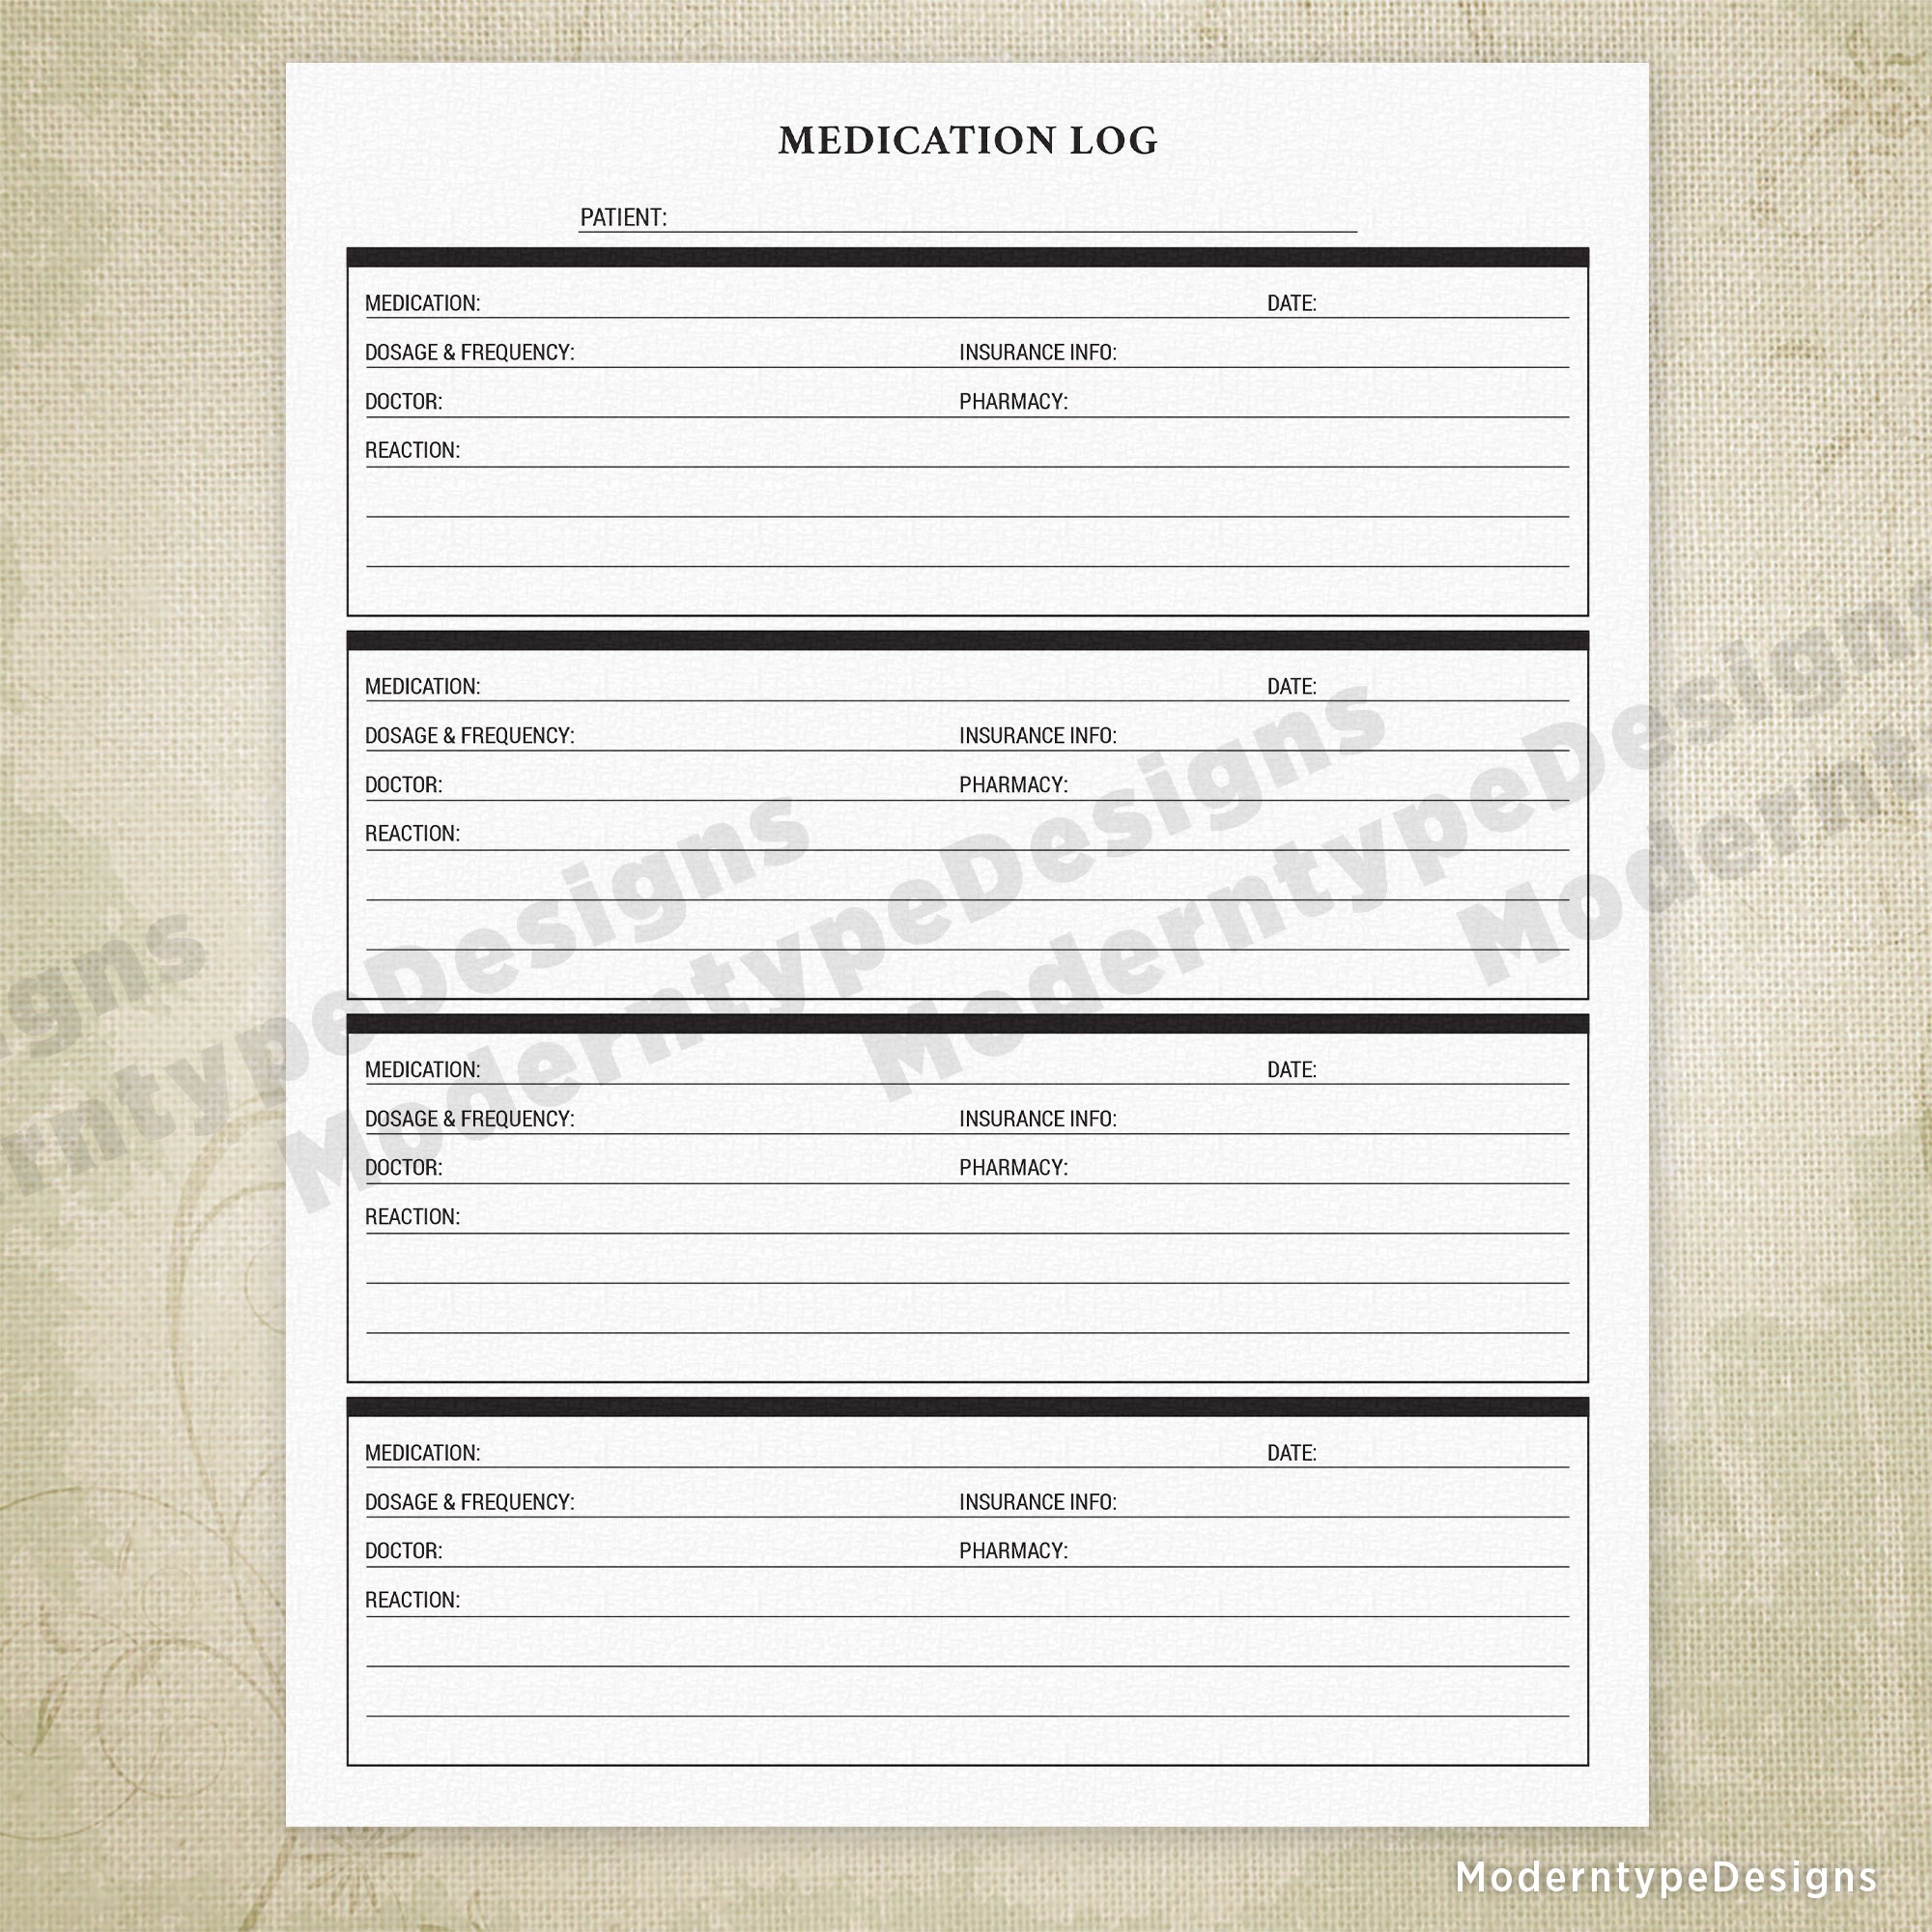 Medication Log Printable Form for Patients